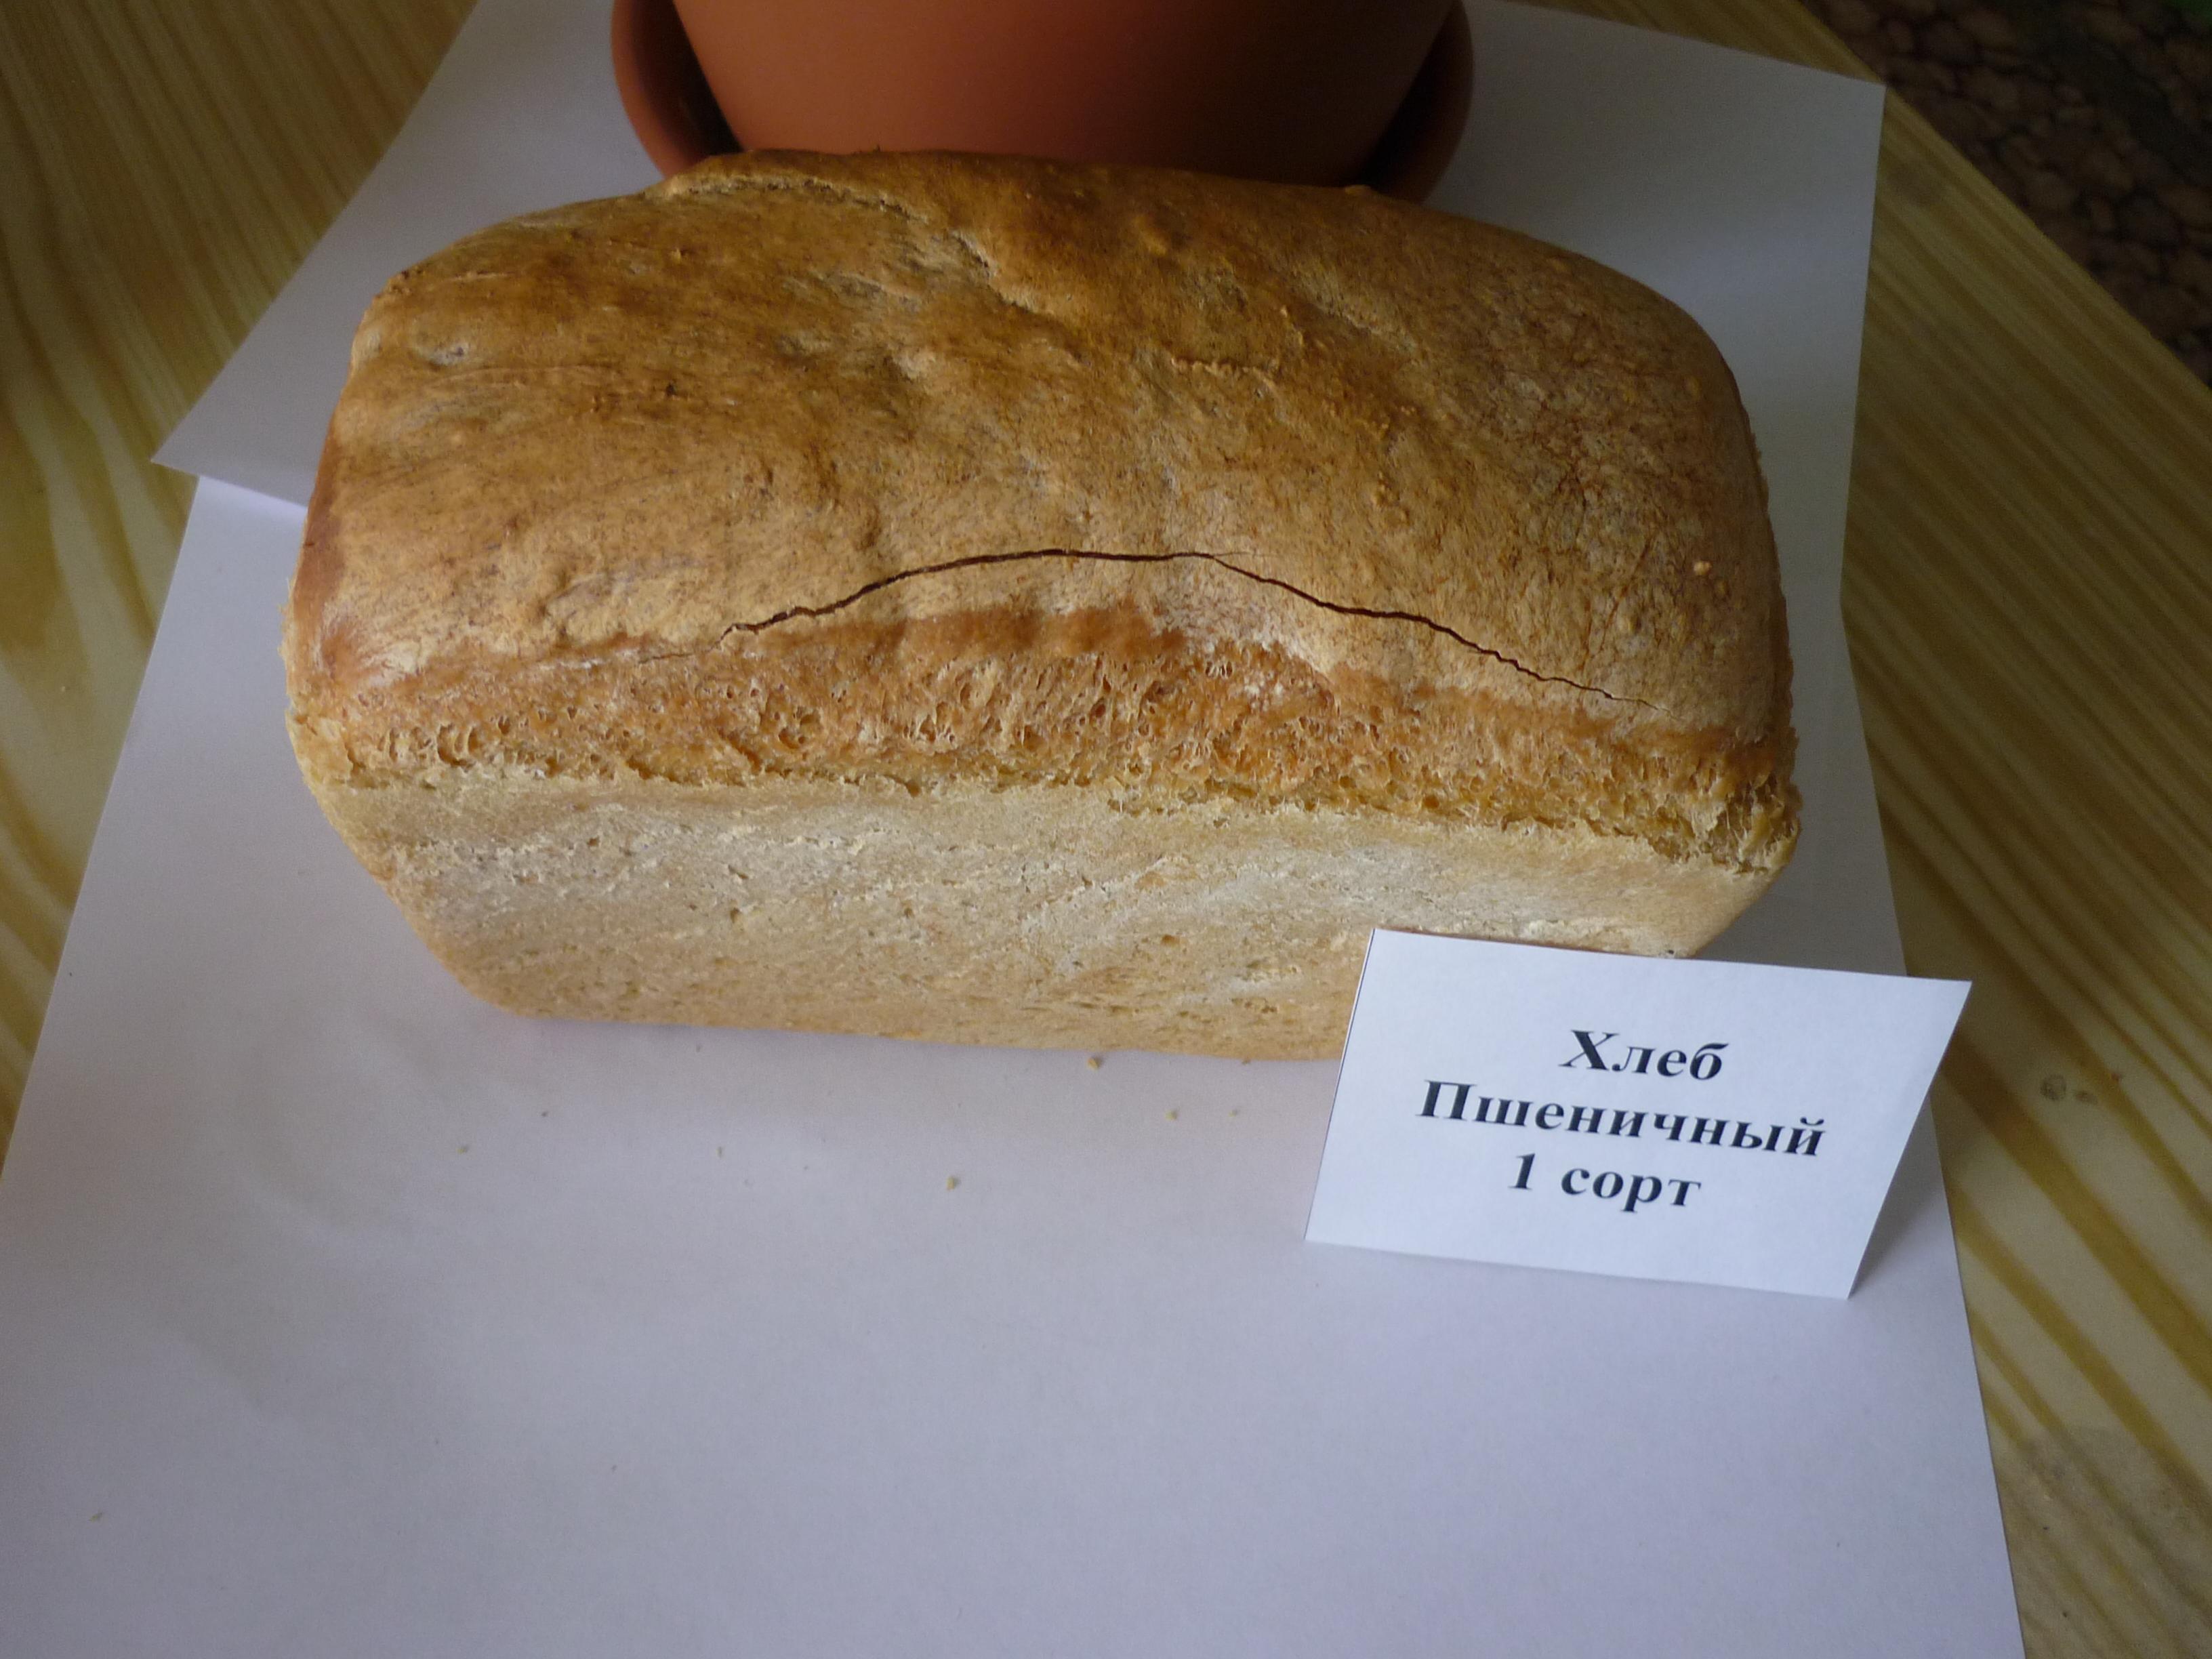 Оценка качества хлеба. Половина хлеба. Торт из хлебного мякиша. Хлеб со вкусом спирта.